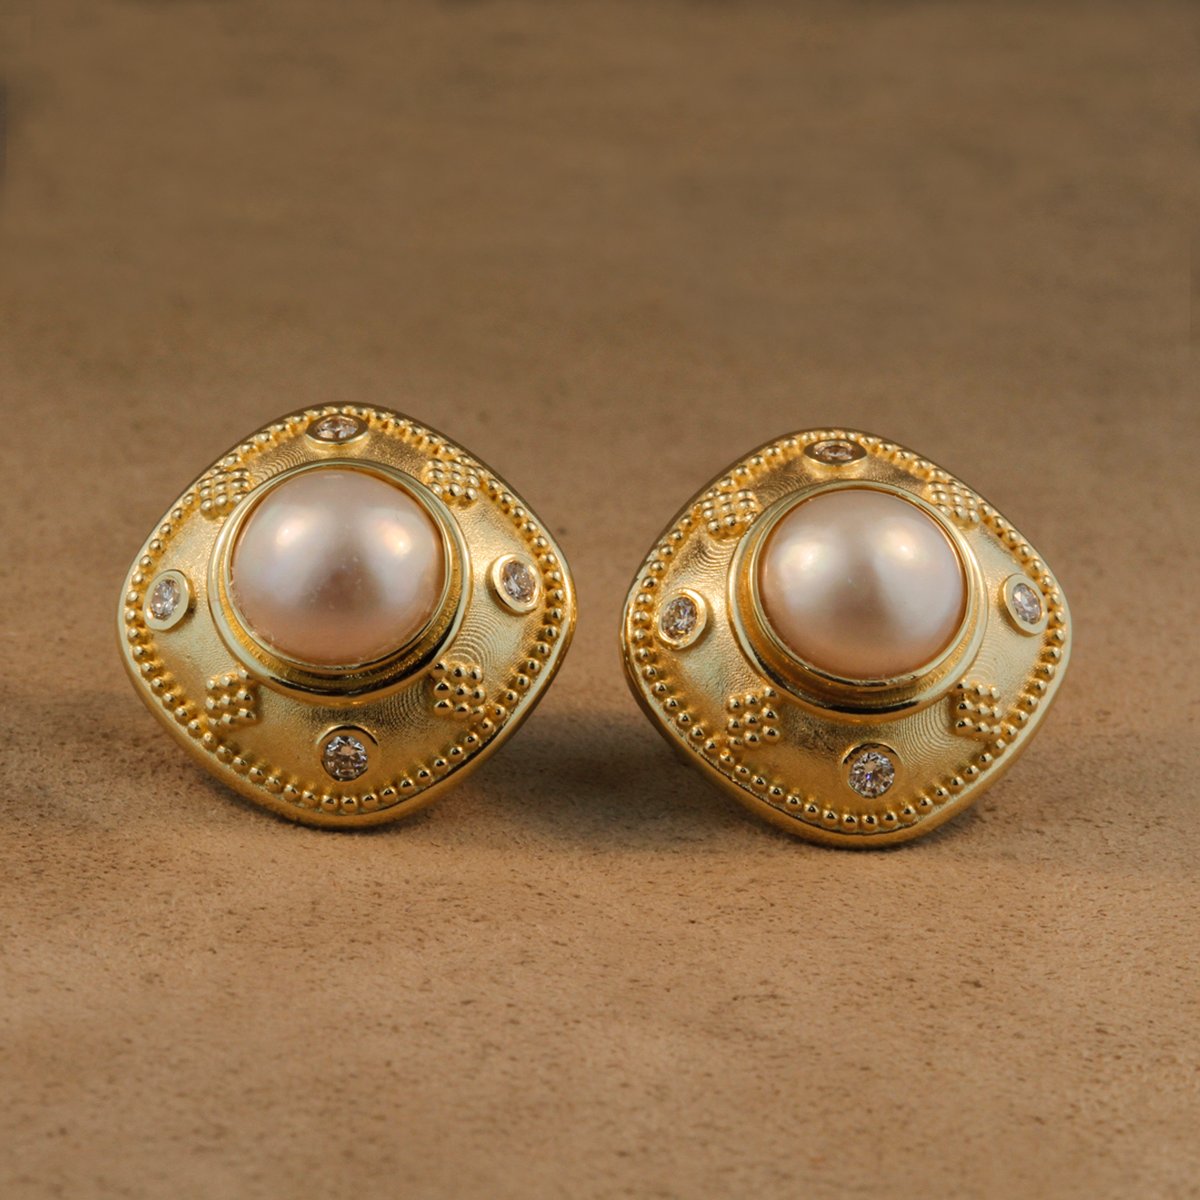 Venice Earrings in Pearl and Diamonds